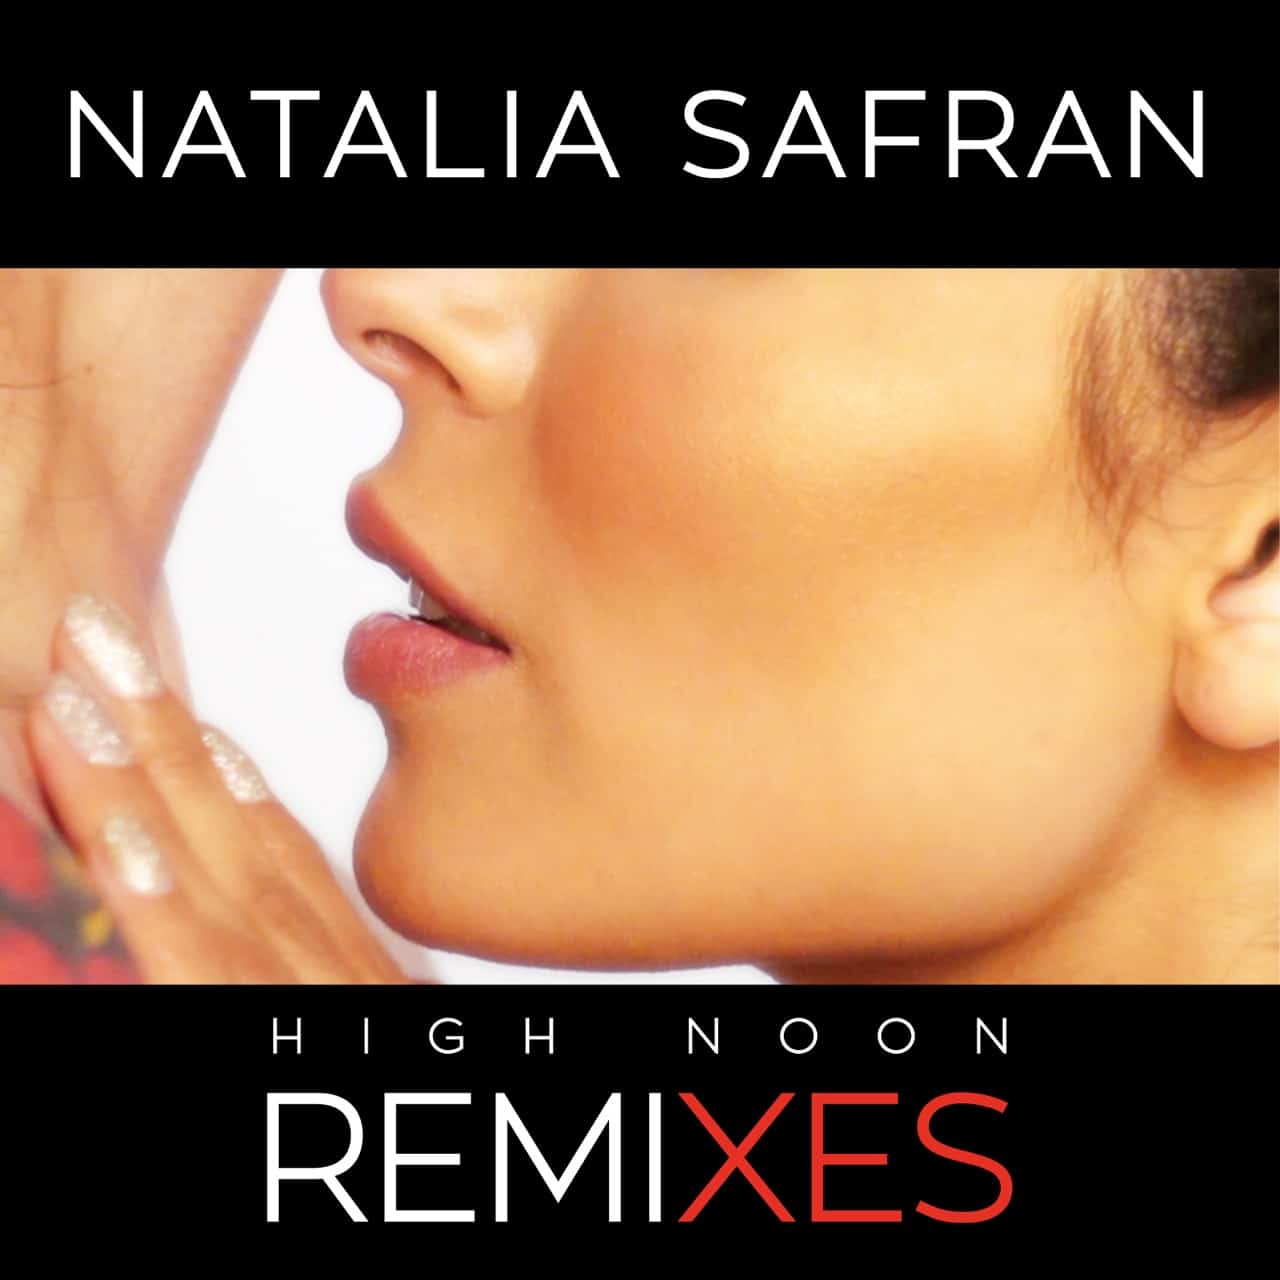 Piosenka Natalii Safran szturmuje Billboard